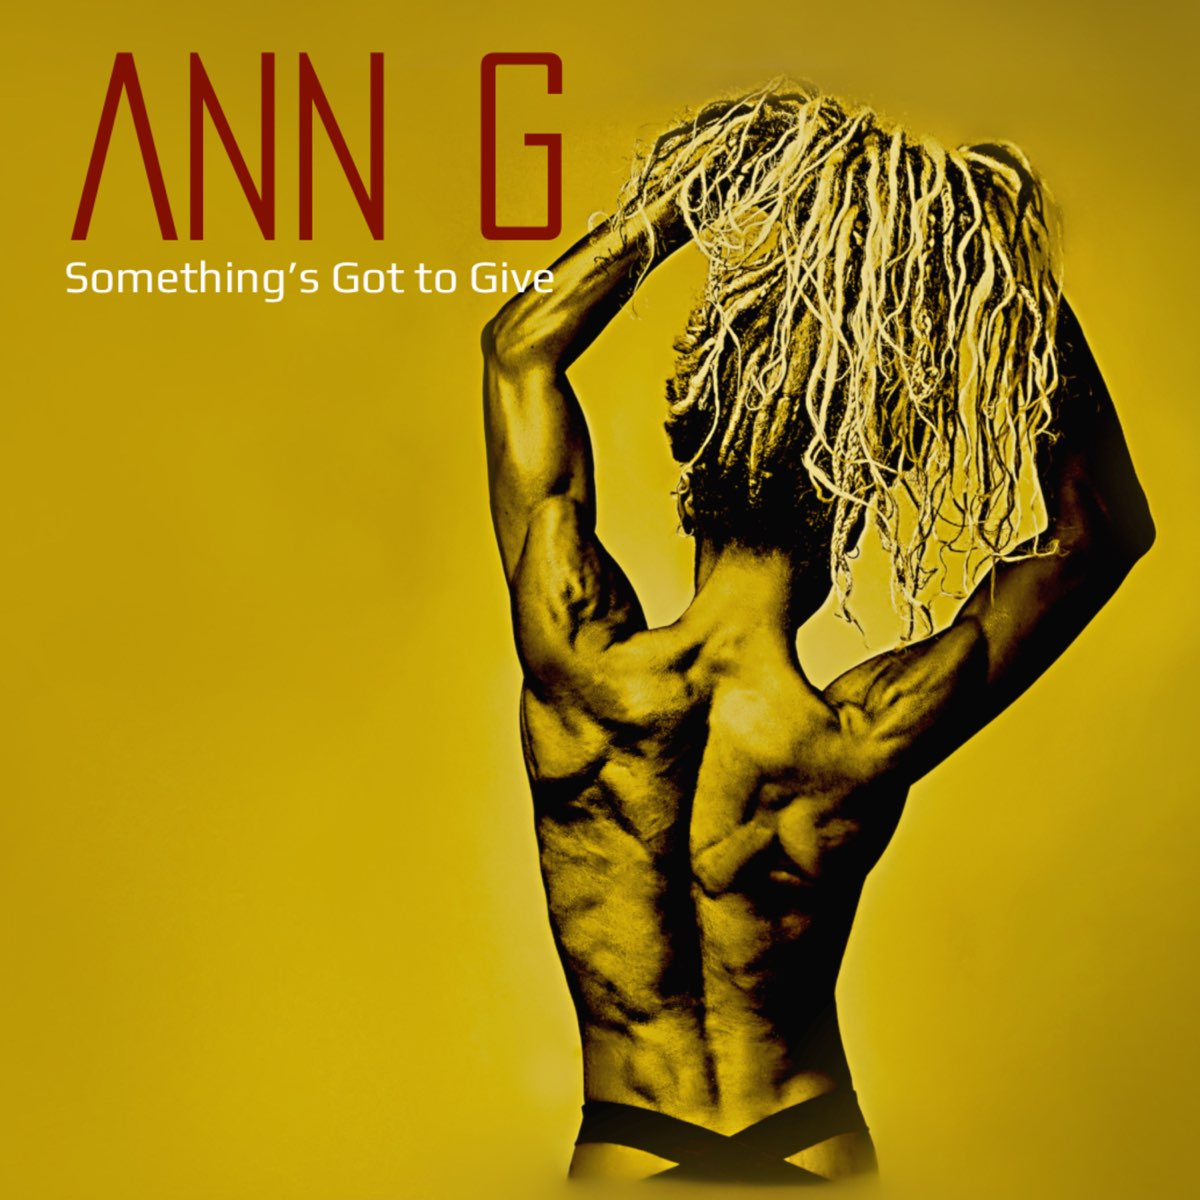 Something got to give. Ann g певица.